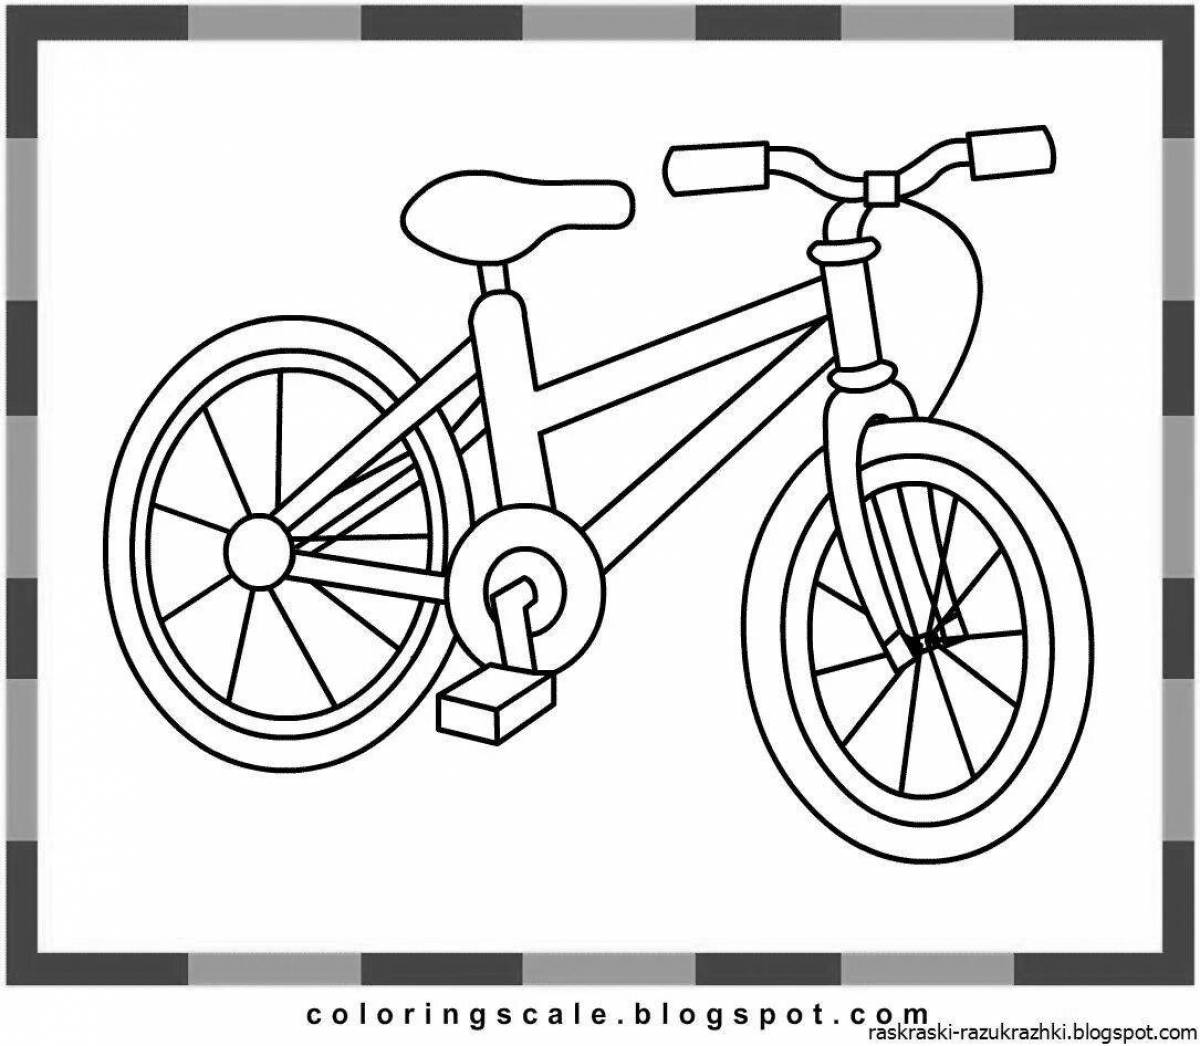 Sweet bike coloring book for kids